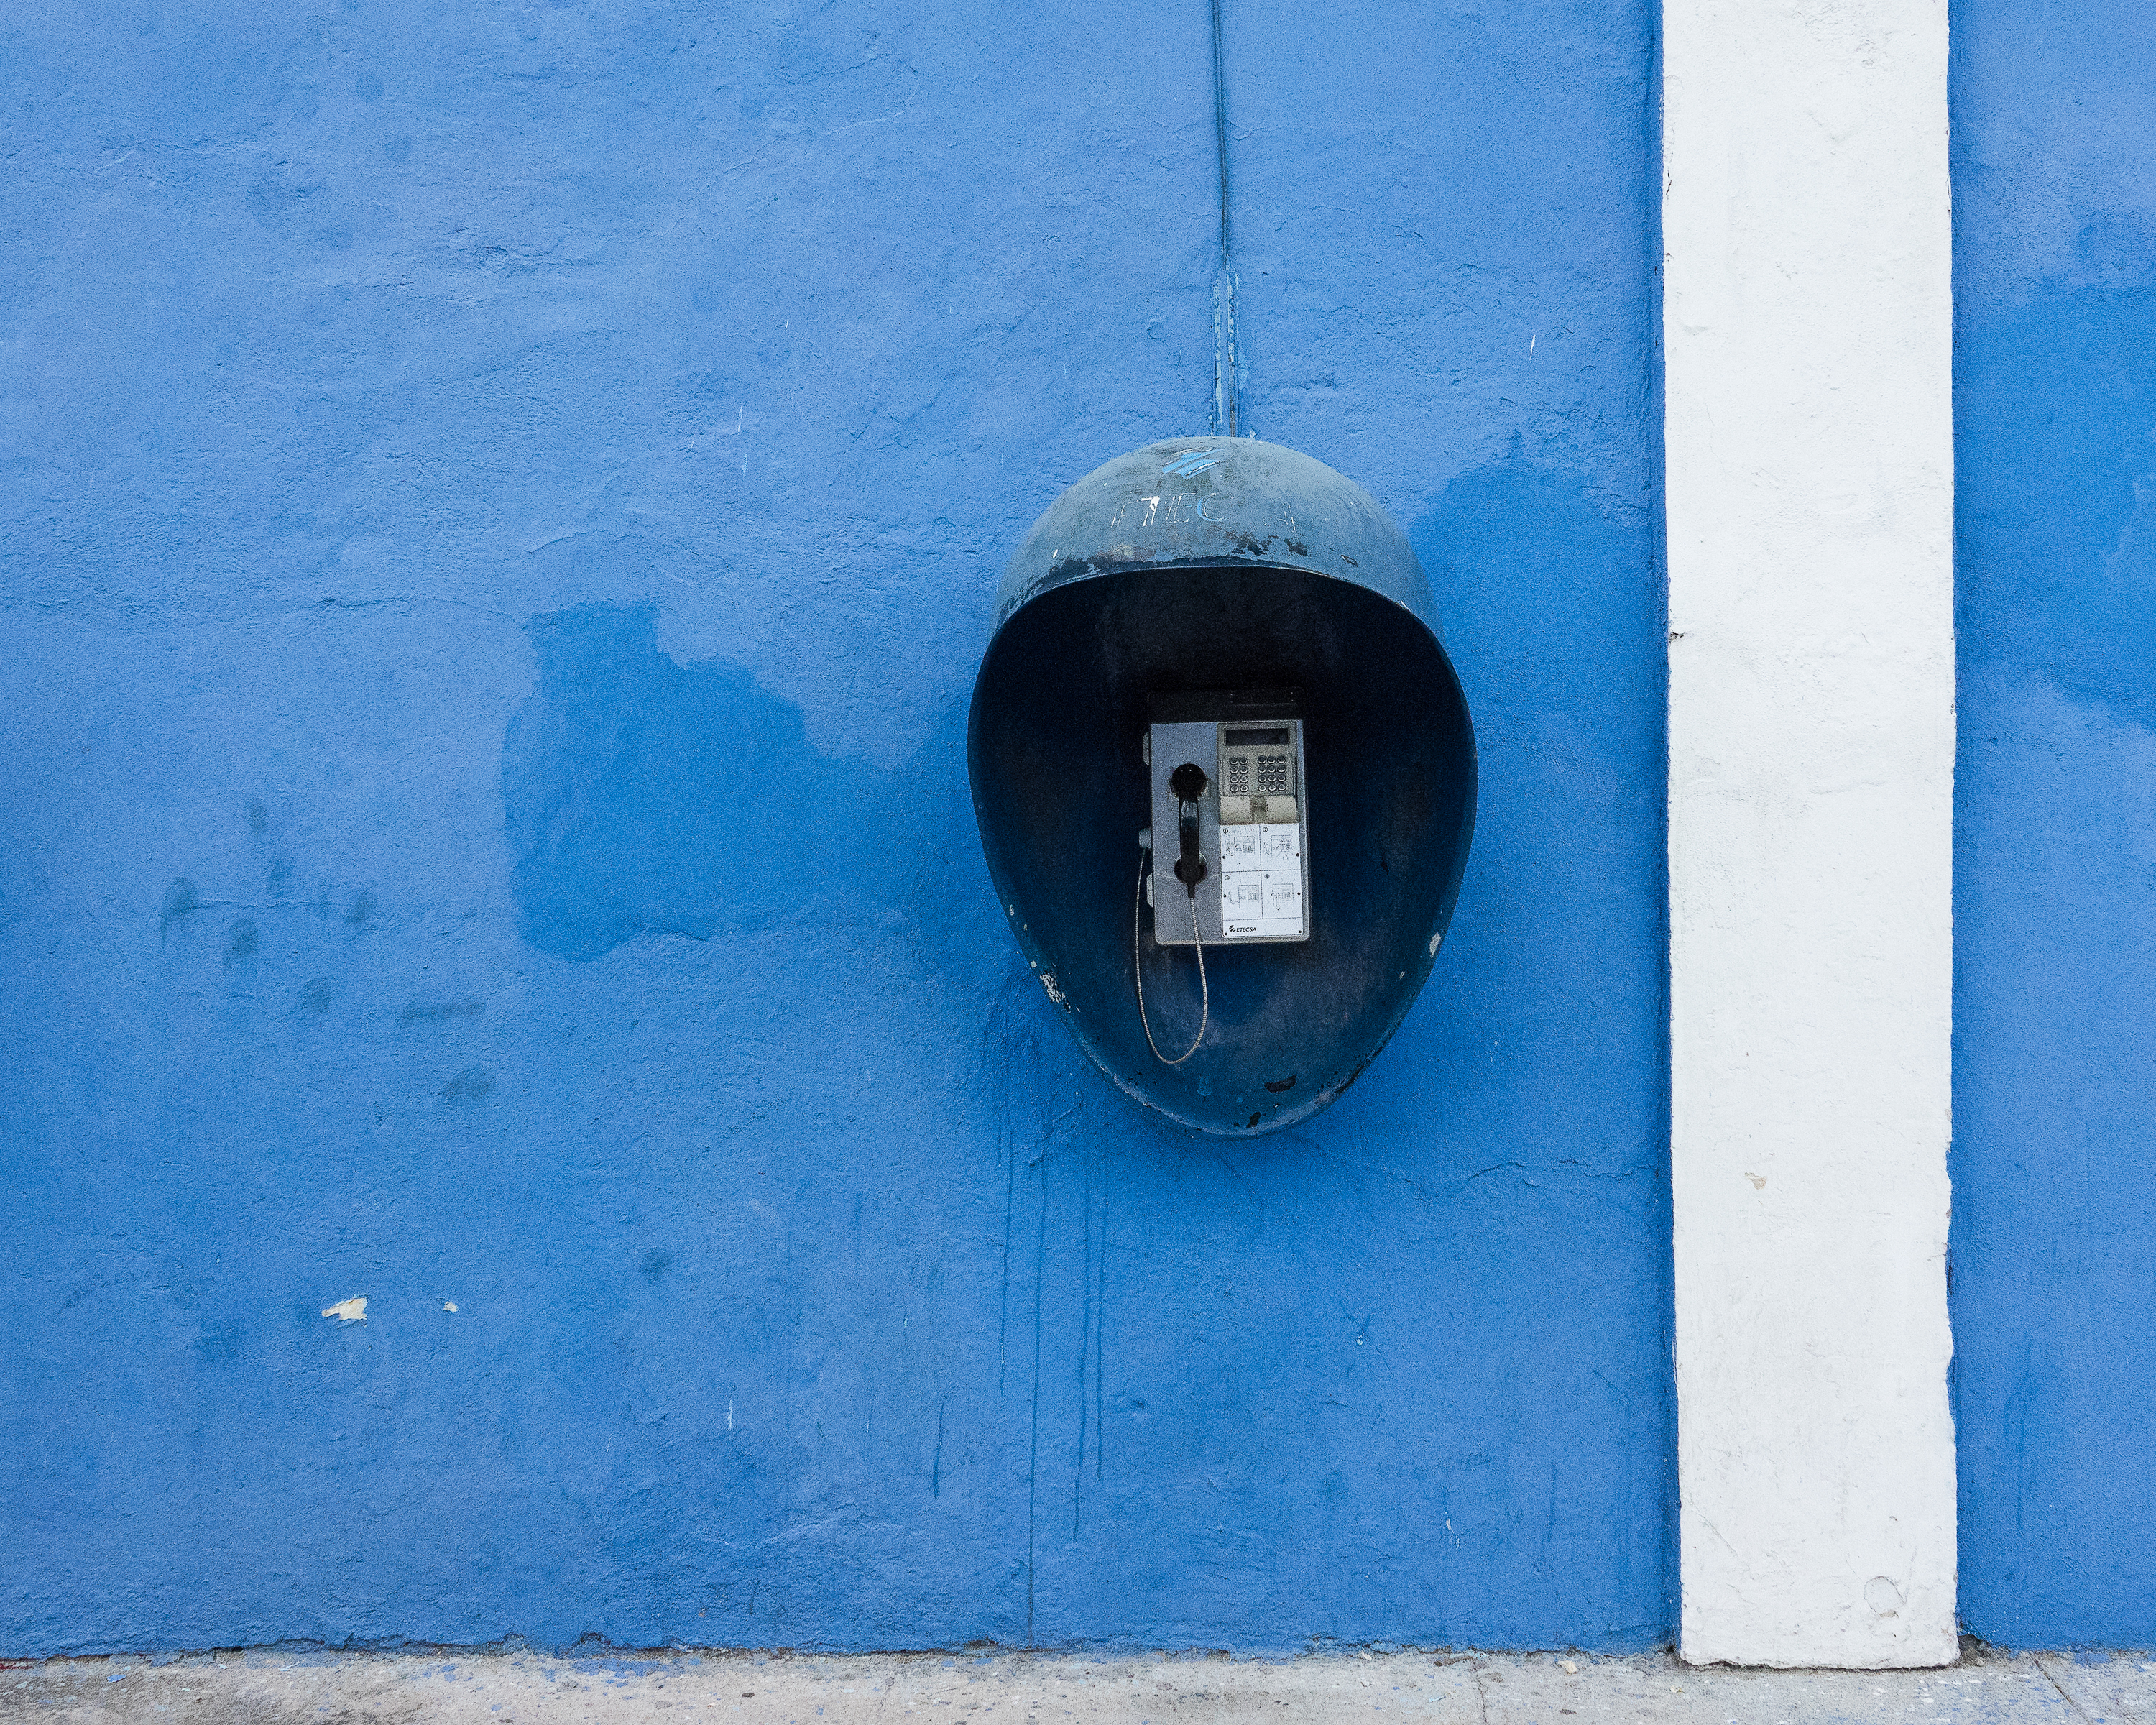 Phone booth, Remedios, Cuba (2017)